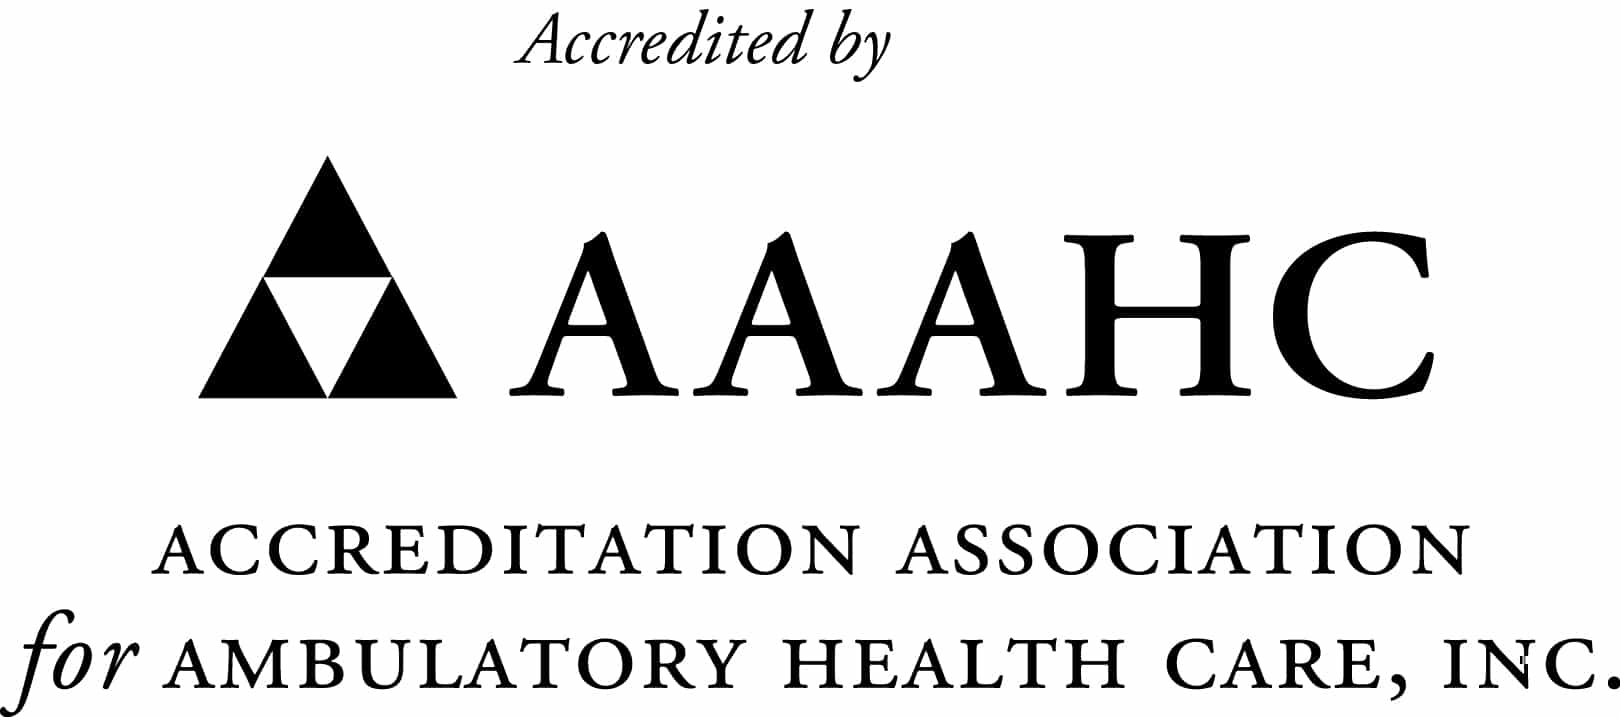 AAAHC Acreditation